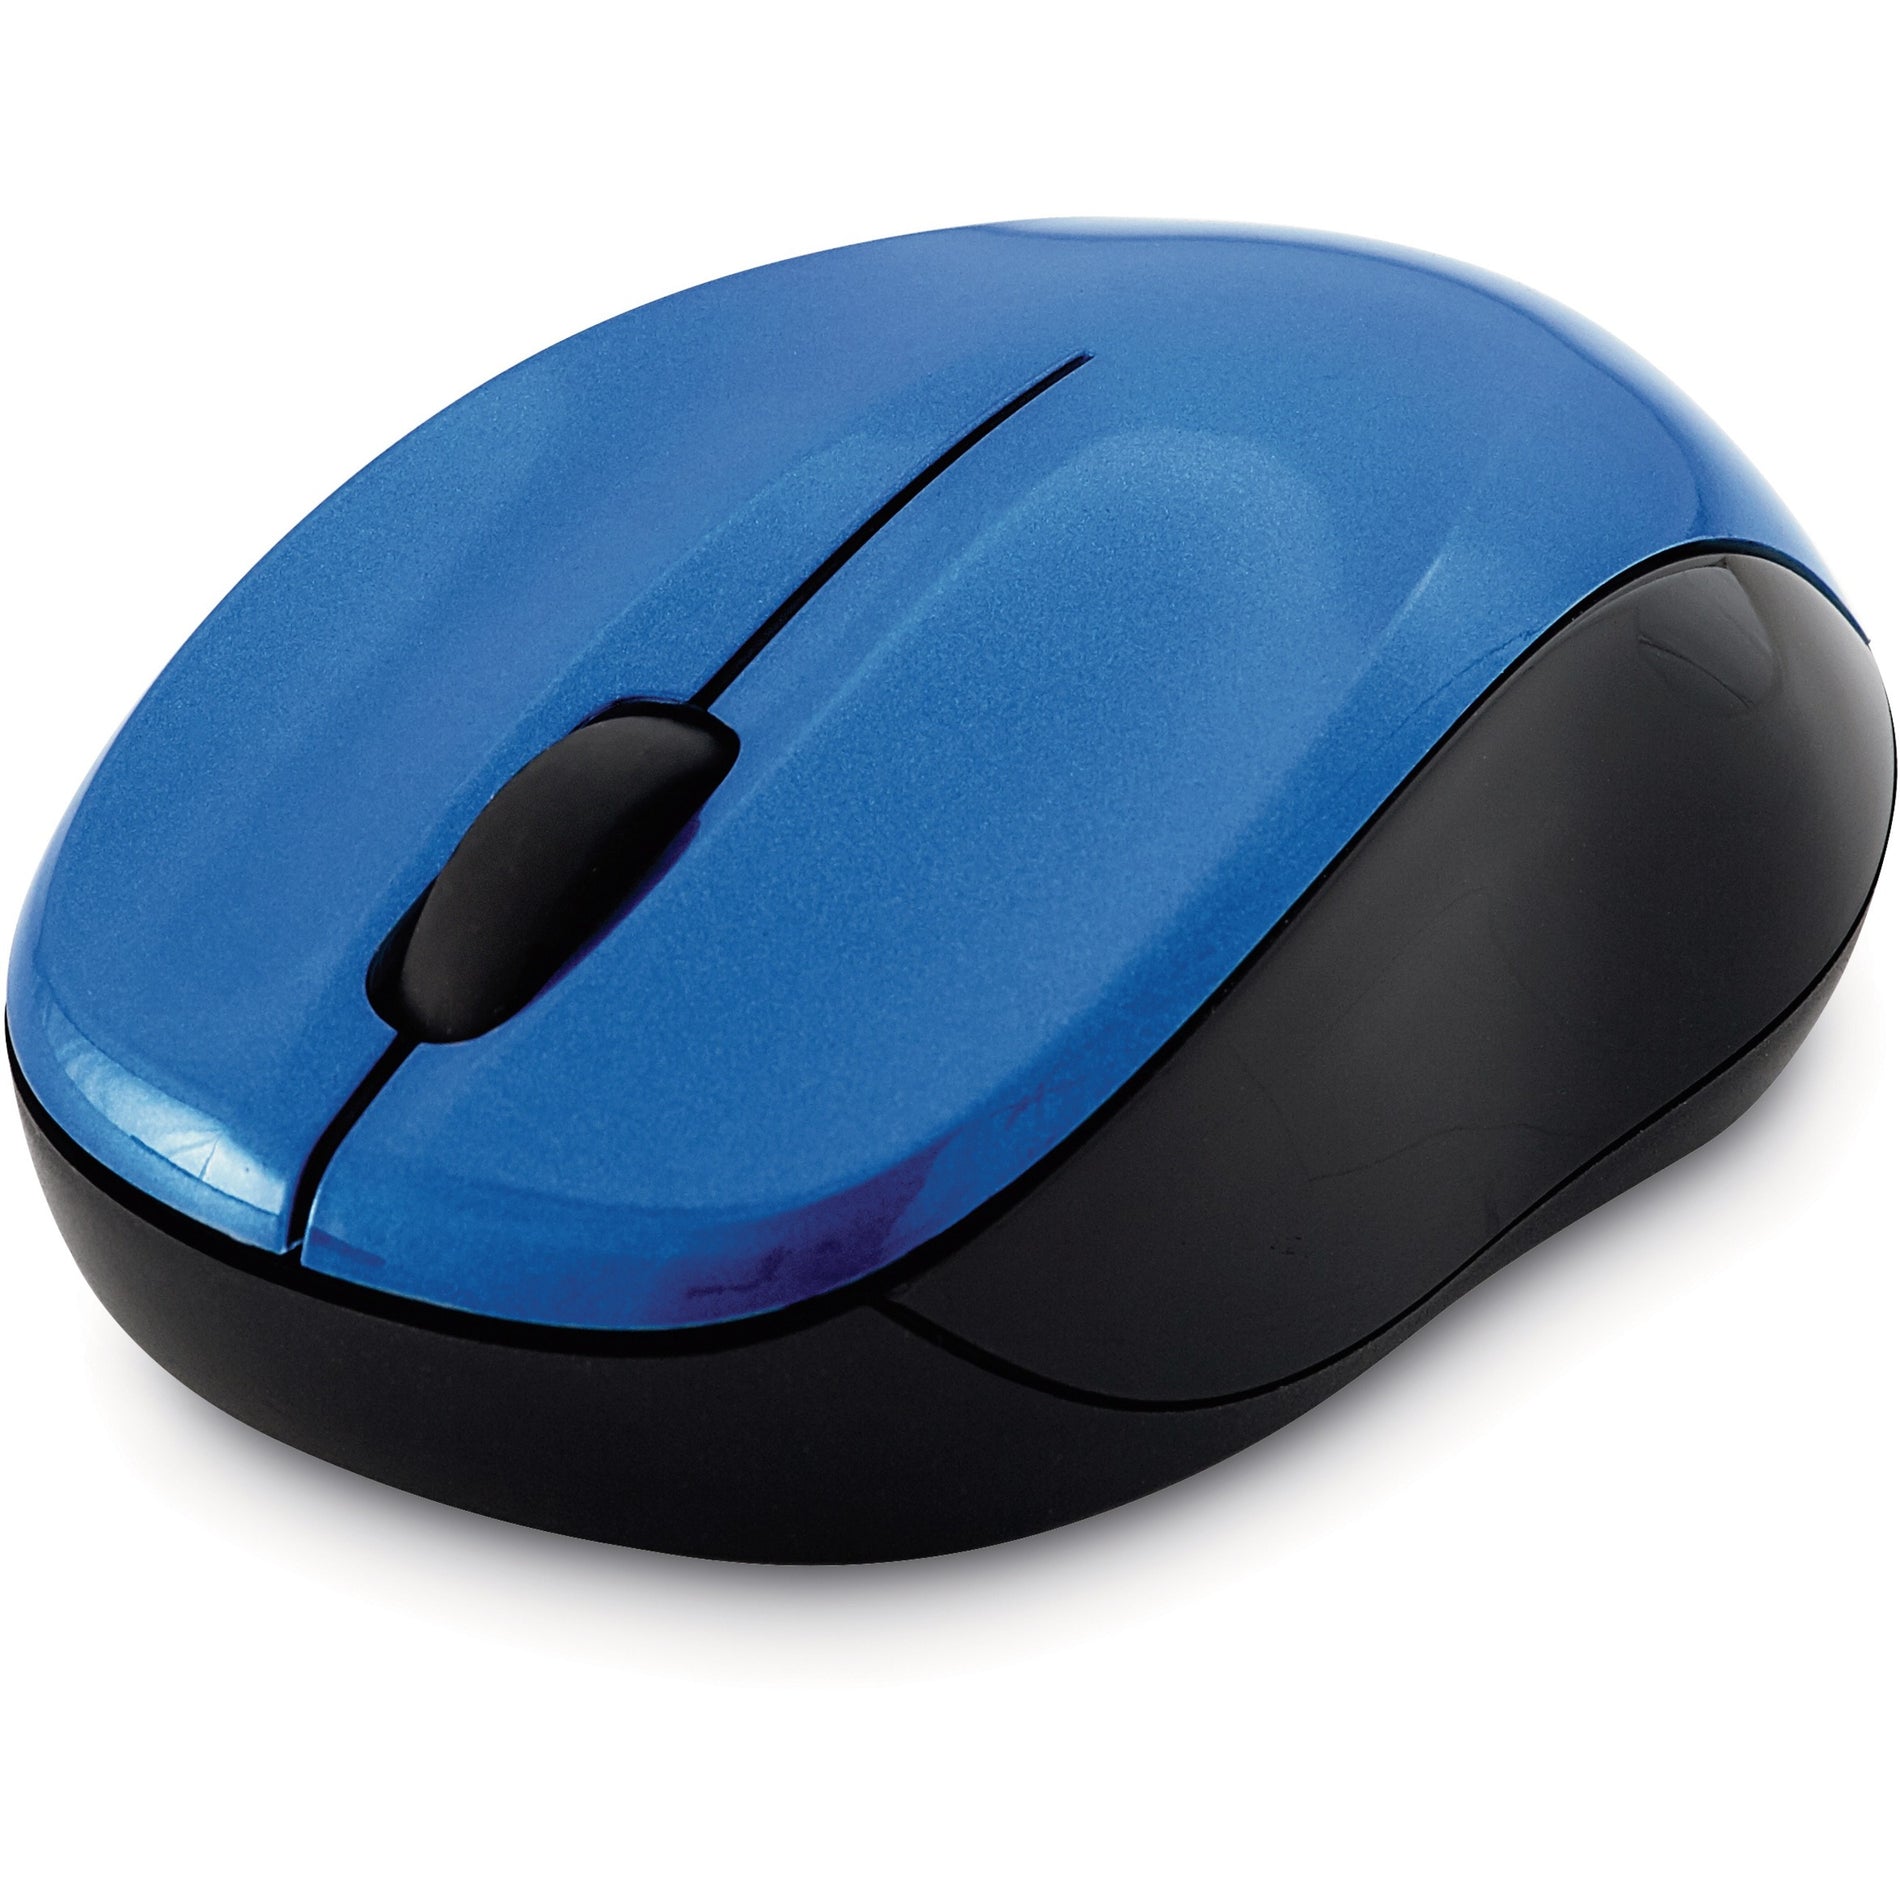 Verbatim 99770 Silent Wireless Blue LED Mouse - Blue, Wireless for PCs & Macs